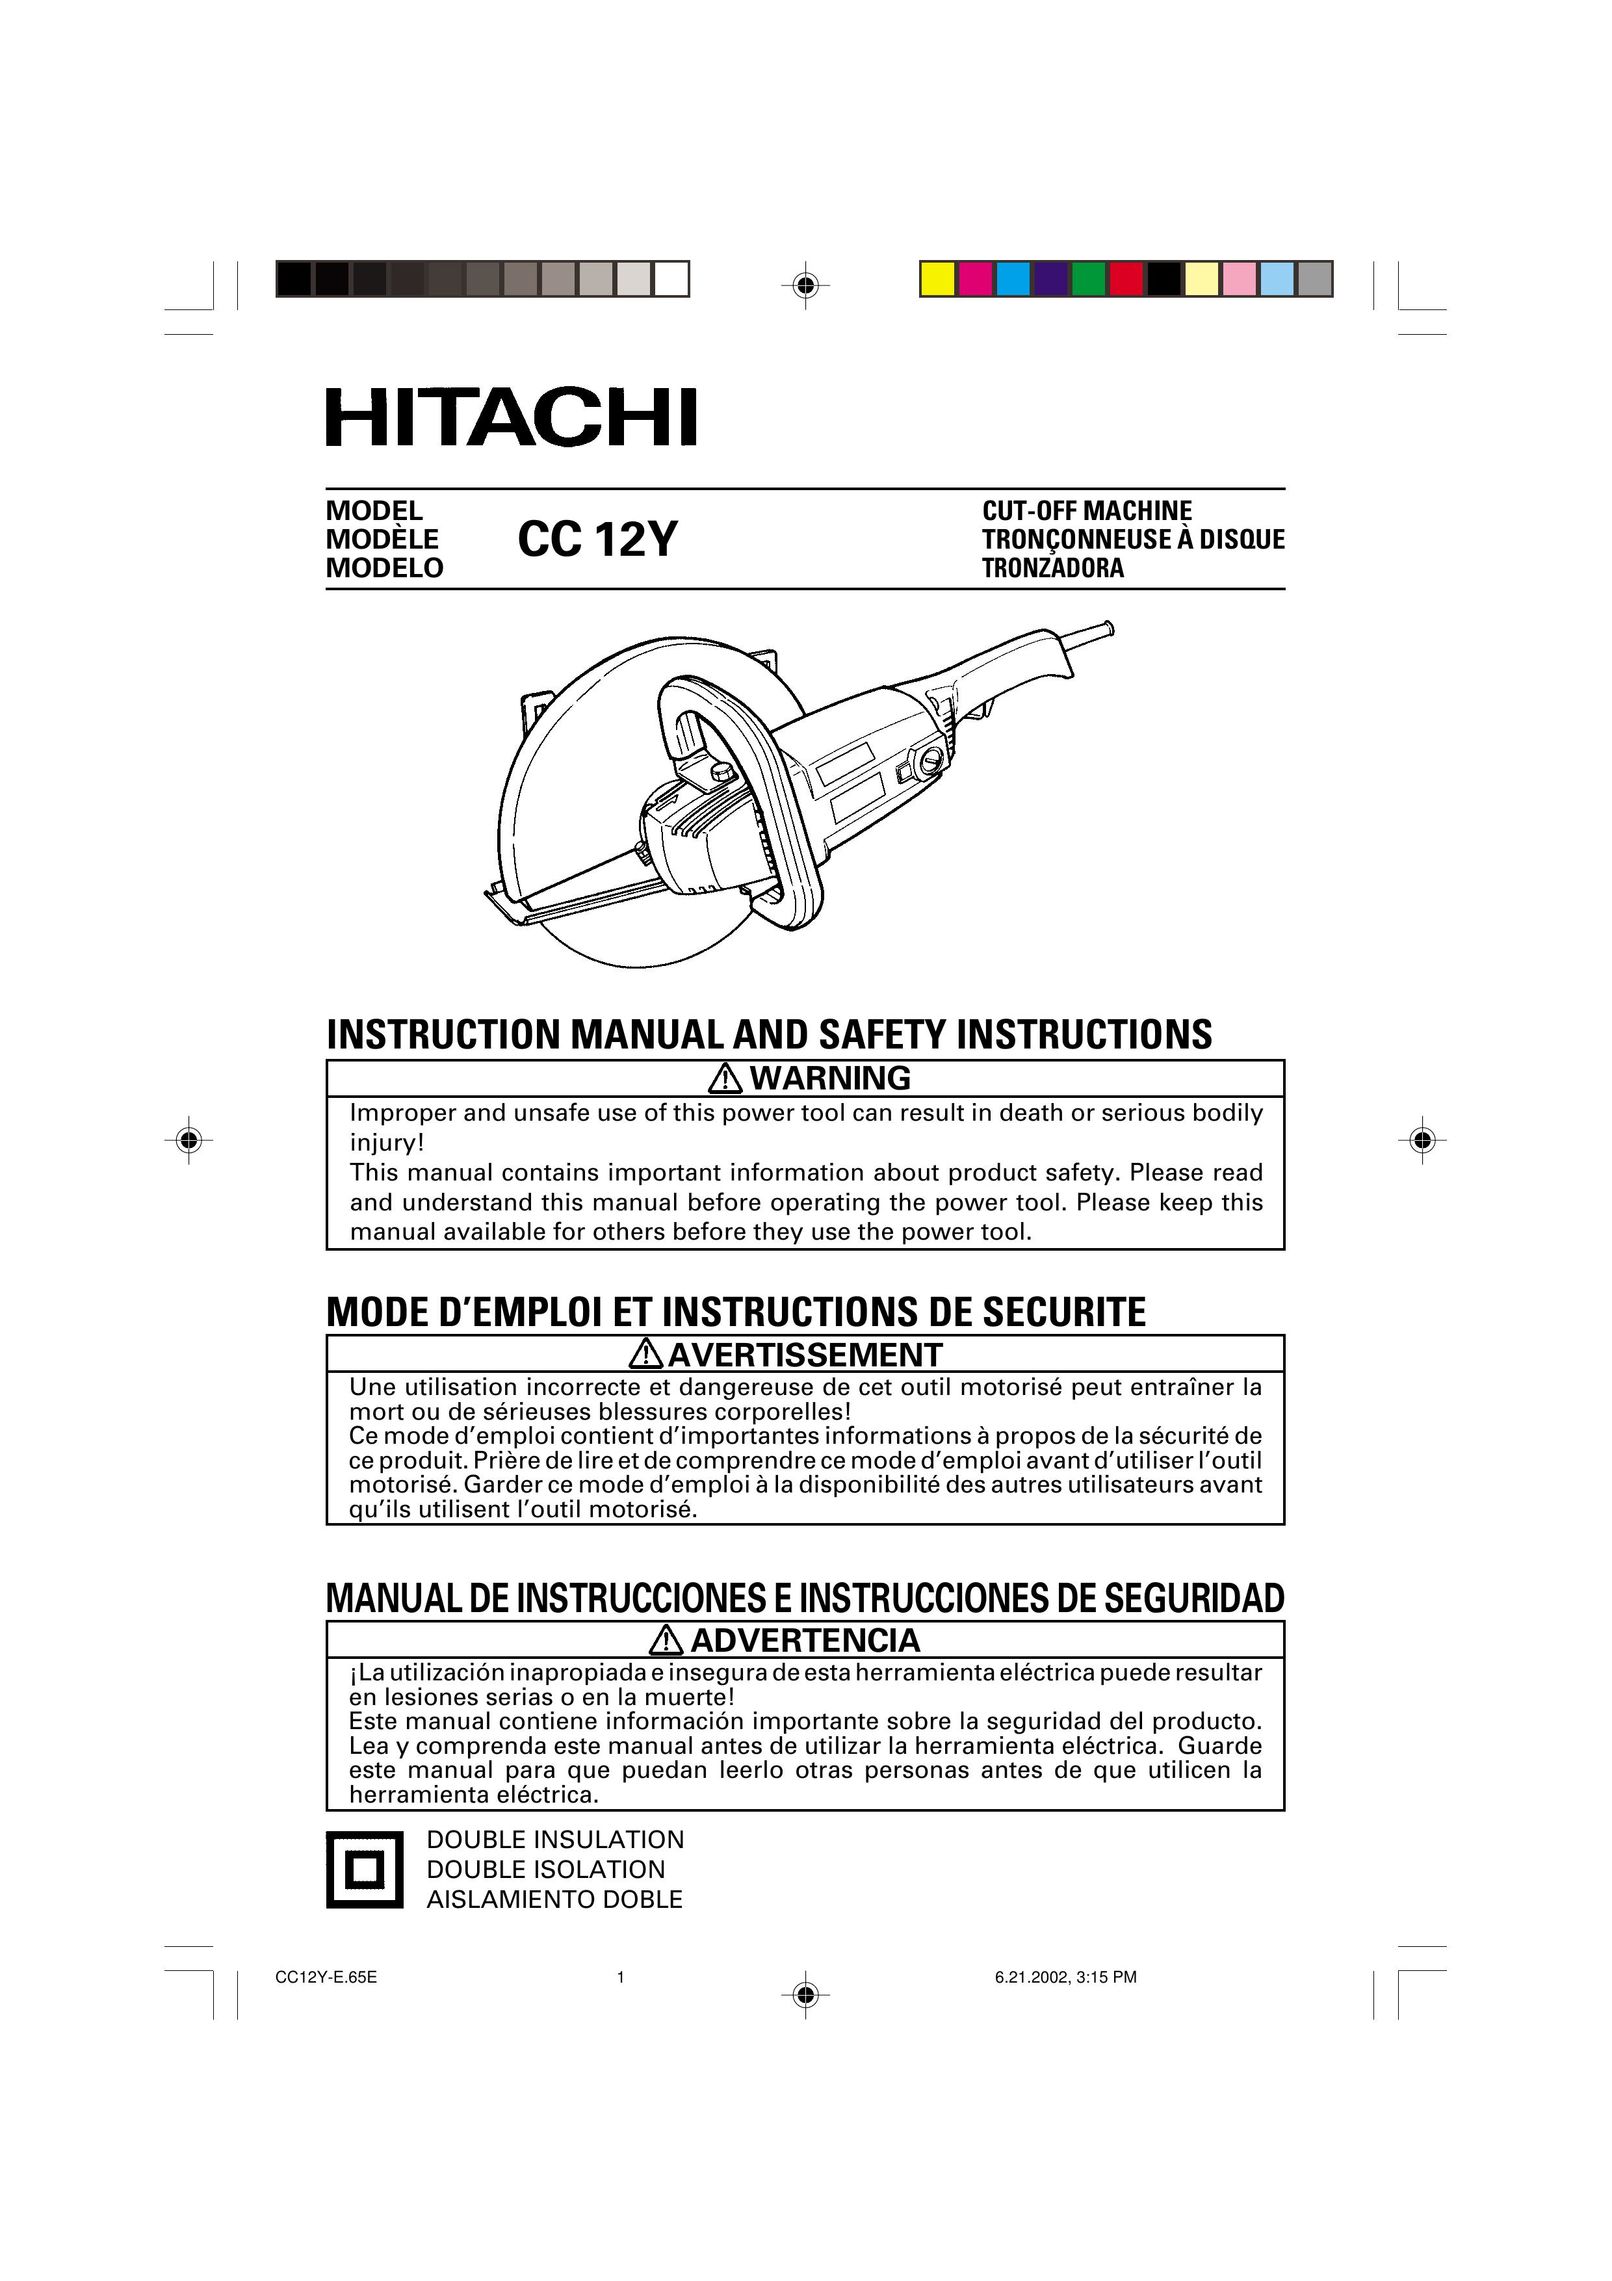 Hitachi CC 12Y Welder User Manual